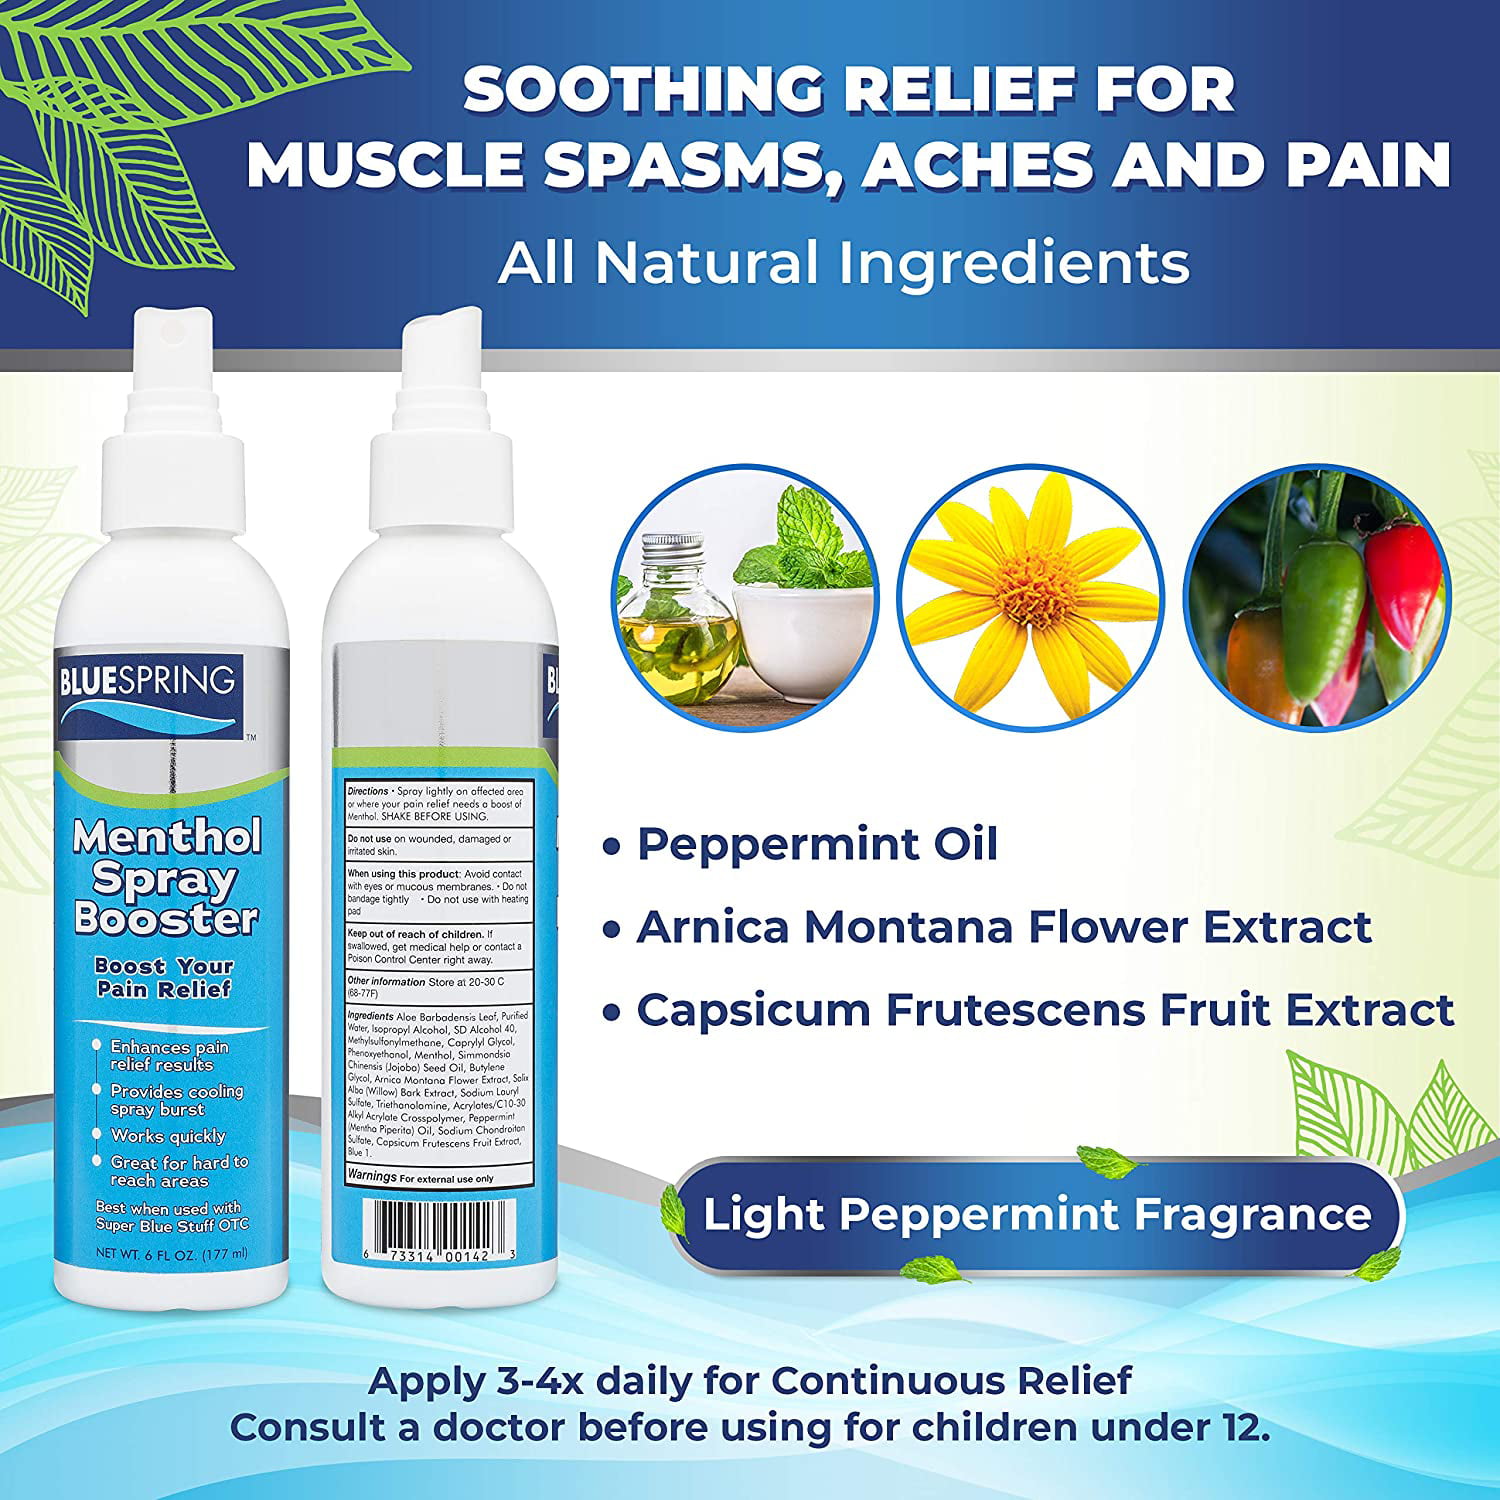 BlueSpring Back Pain Relief Spray, [6 oz] Menthol Spray Booster ...